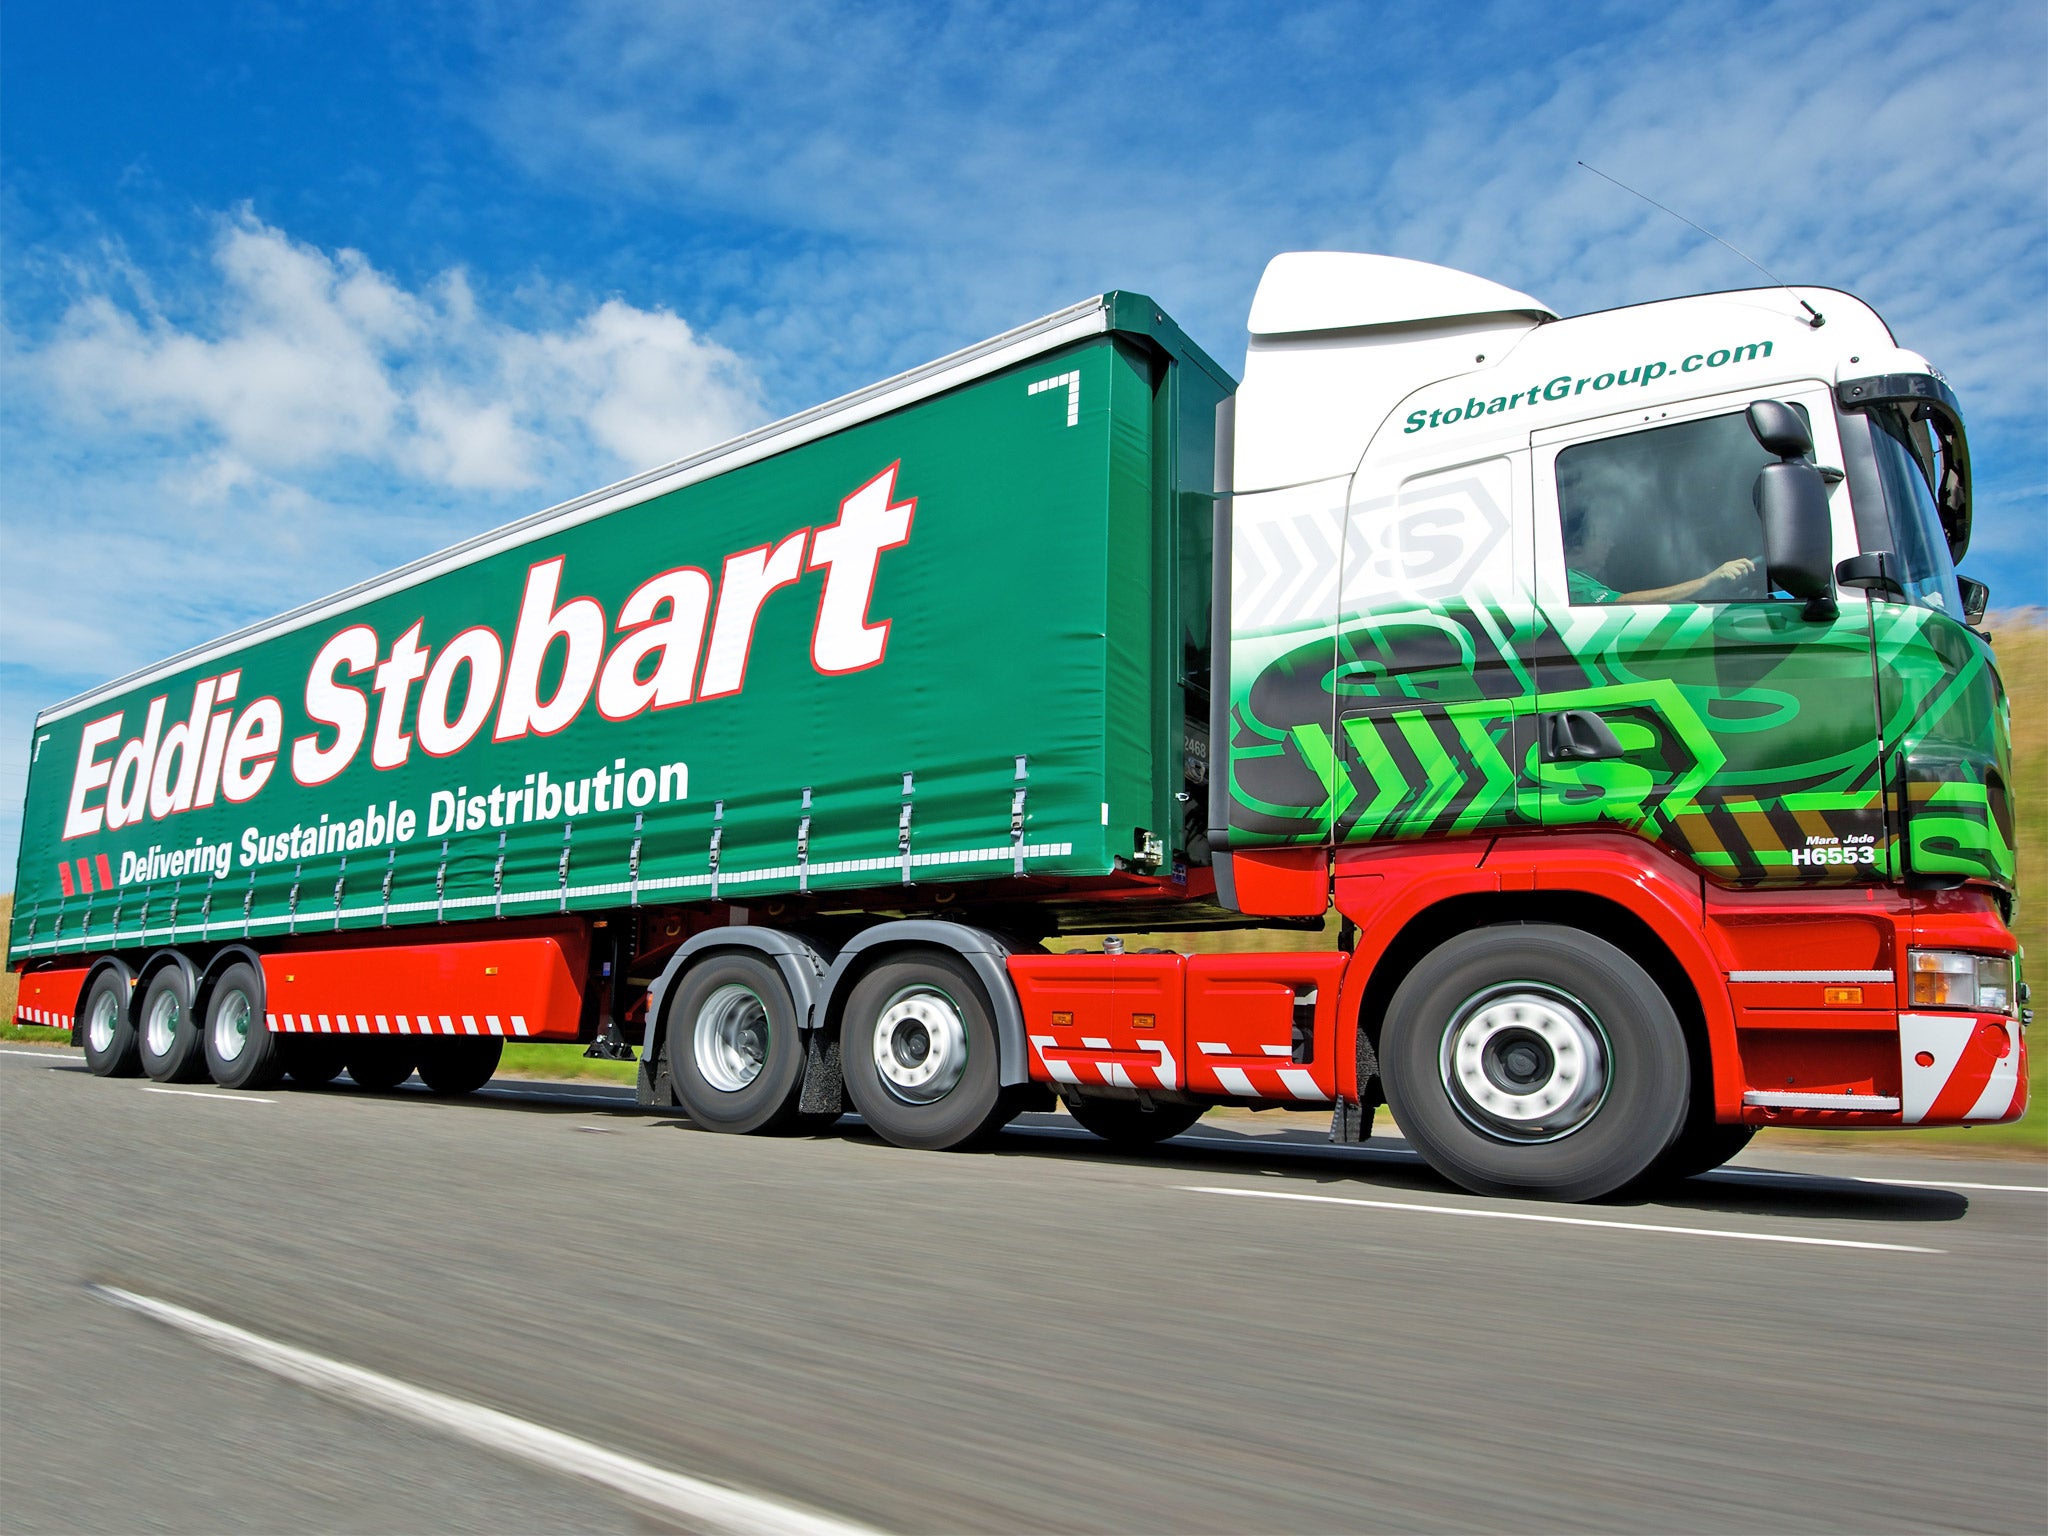 Stobart is Britain’s biggest road haulage company